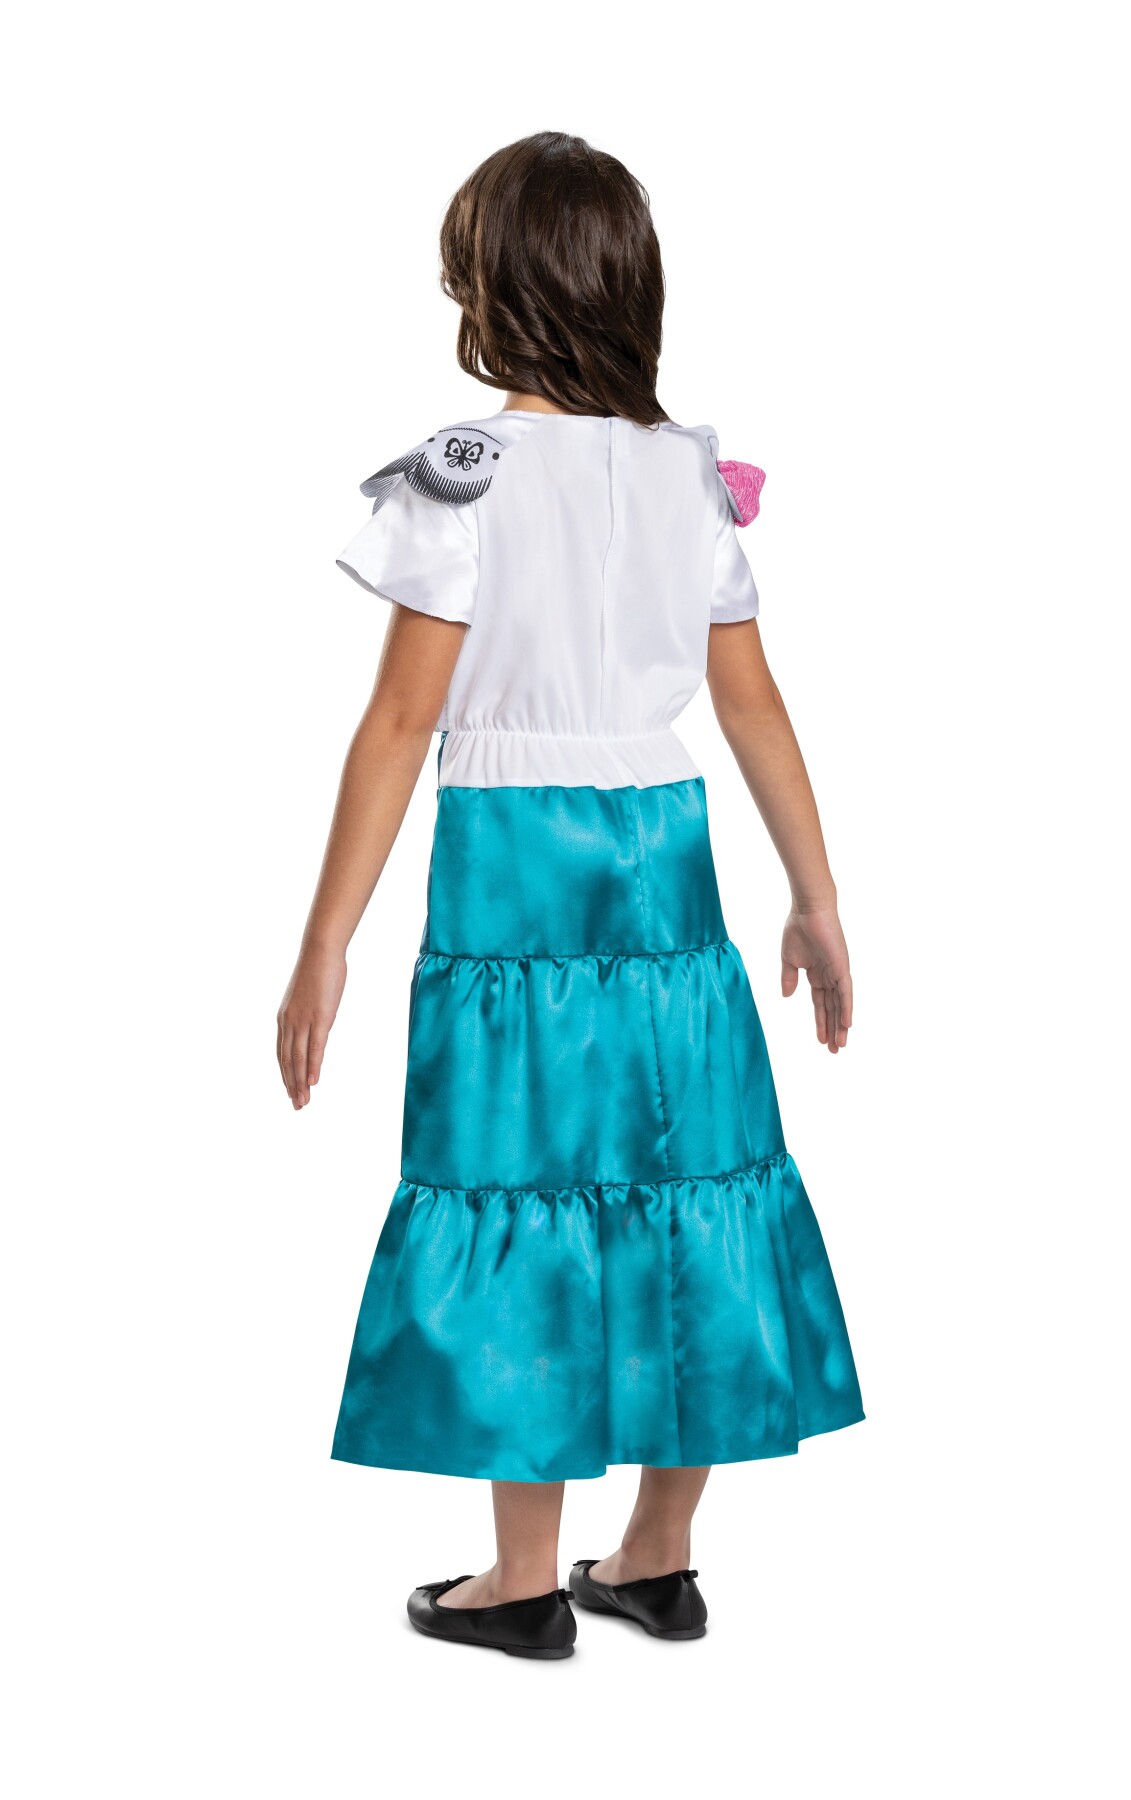 Disney frozen dress up, costume di mirabel deluxe, taglia s, 5-6 anni - DISNEY PRINCESS, Frozen